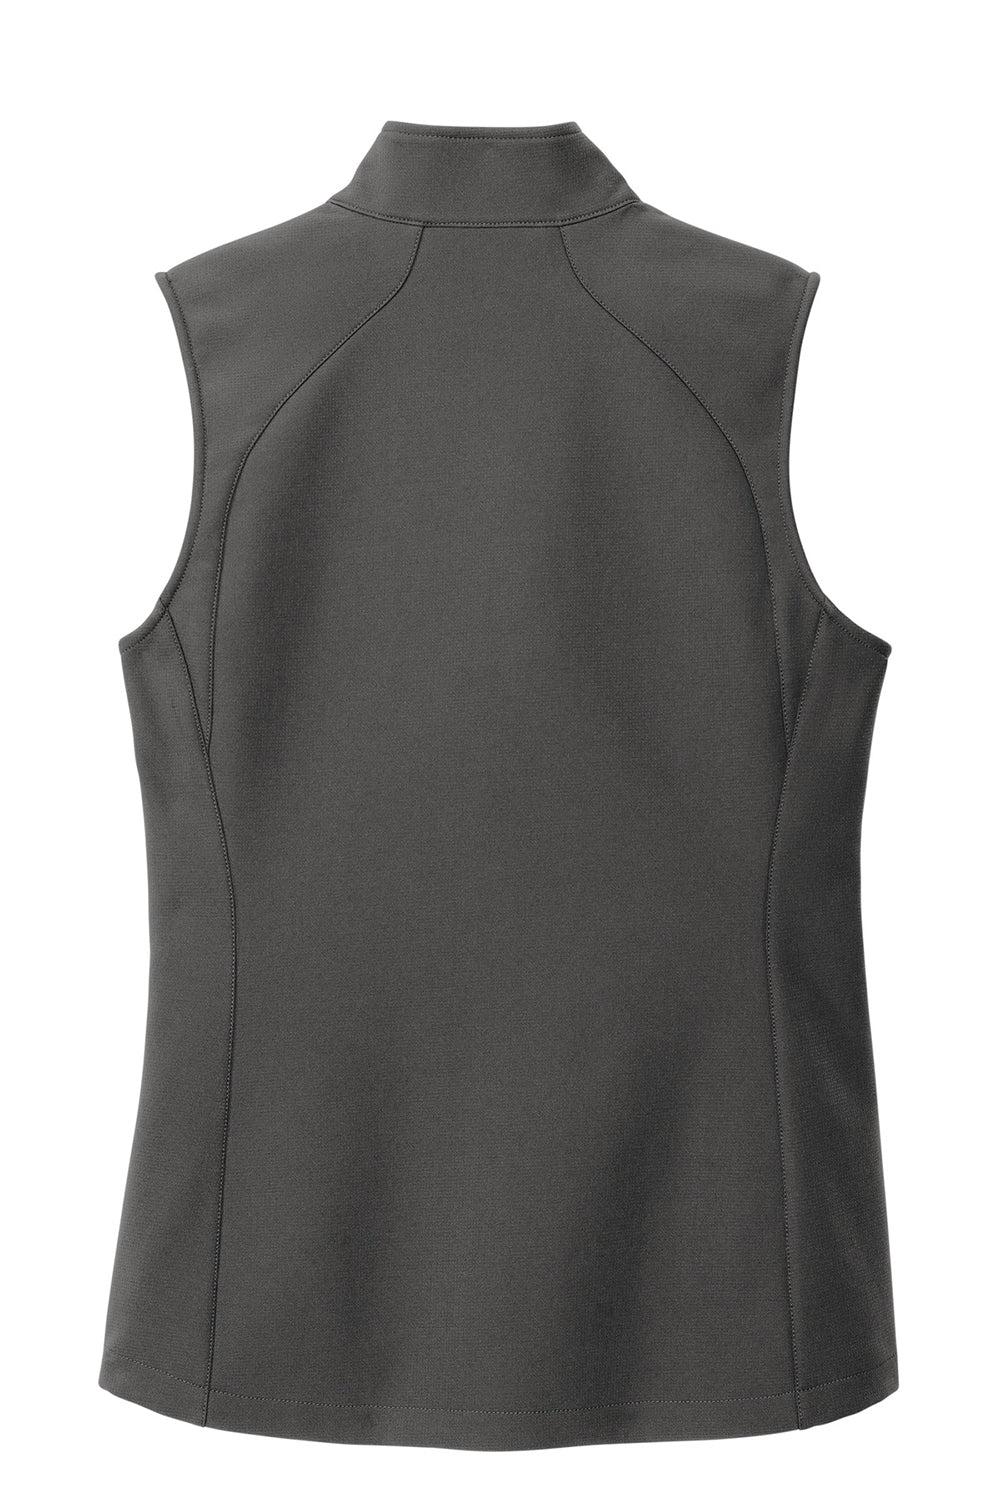 Eddie Bauer EB547 Womens Stretch Soft Shell Full Zip Vest Iron Gate Grey Flat Back